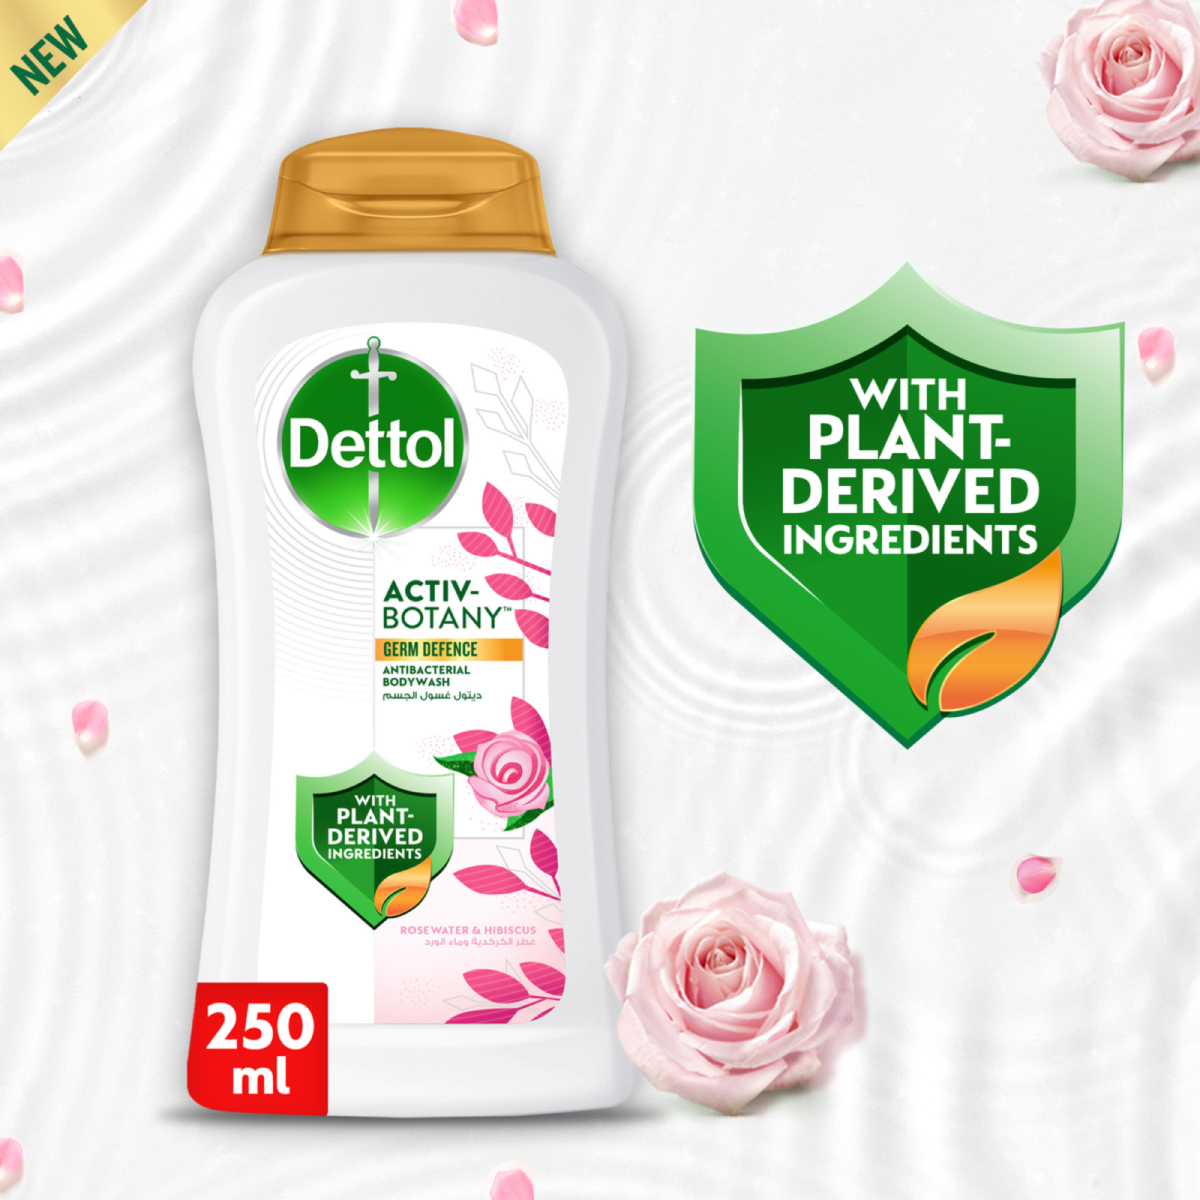 Dettol Activ-Botany Antibacterial Bodywash, Rosewater & Hibiscus Fragrance Value Pack 2 x 250 ml